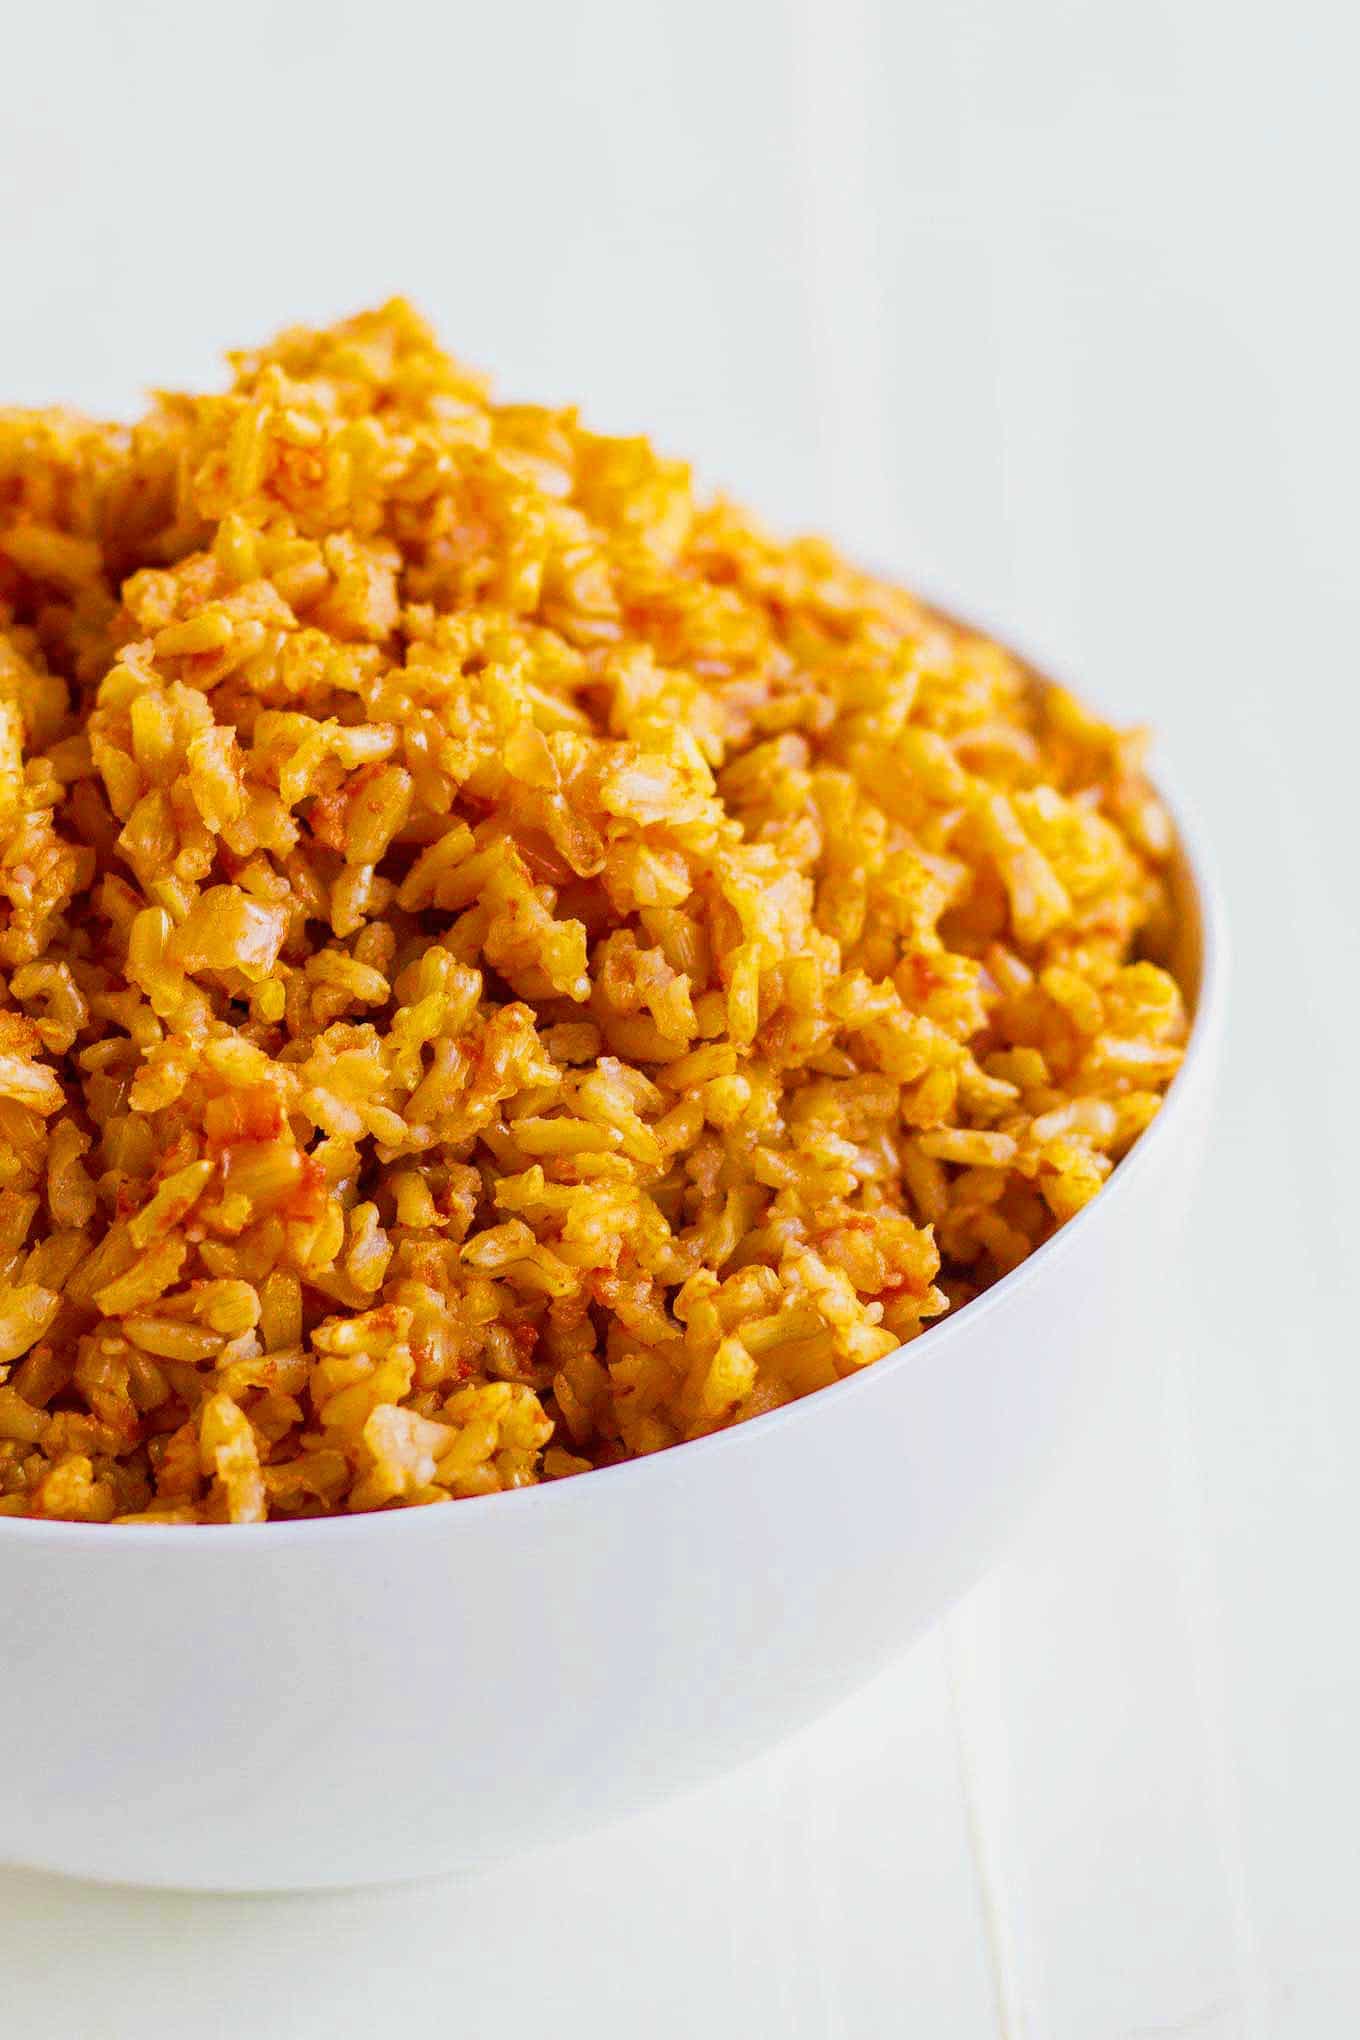 Top 10 Instant Pot Pressure Cooker Recipes- pressure cooker Mexican rice